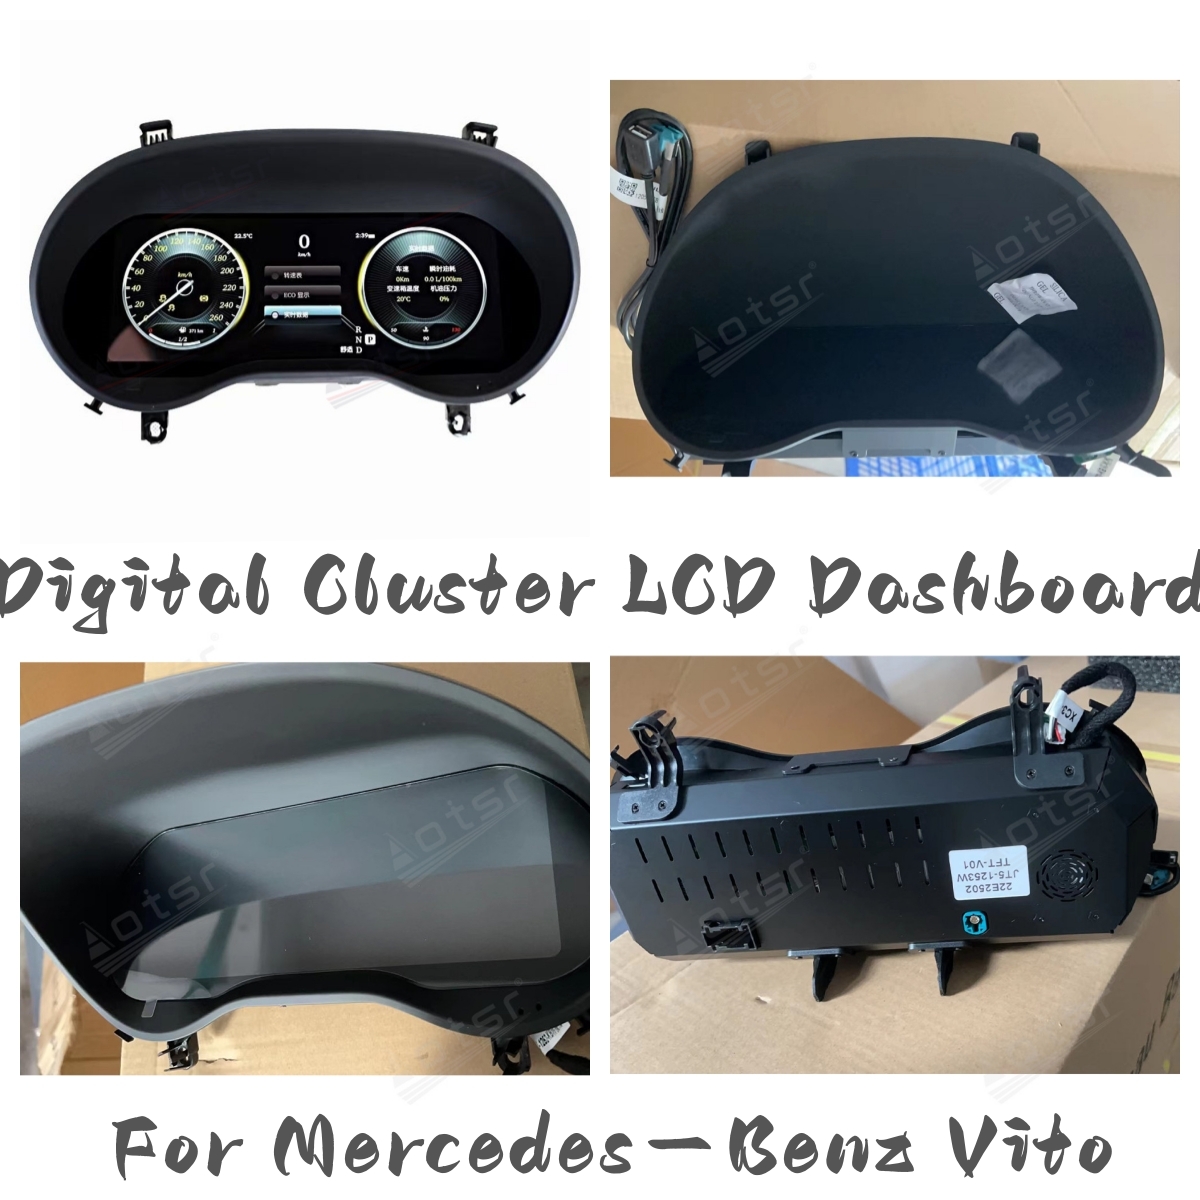 Car Screen Digital Cluster For Mercedes-Benz Vito LCD Dashboard Instru